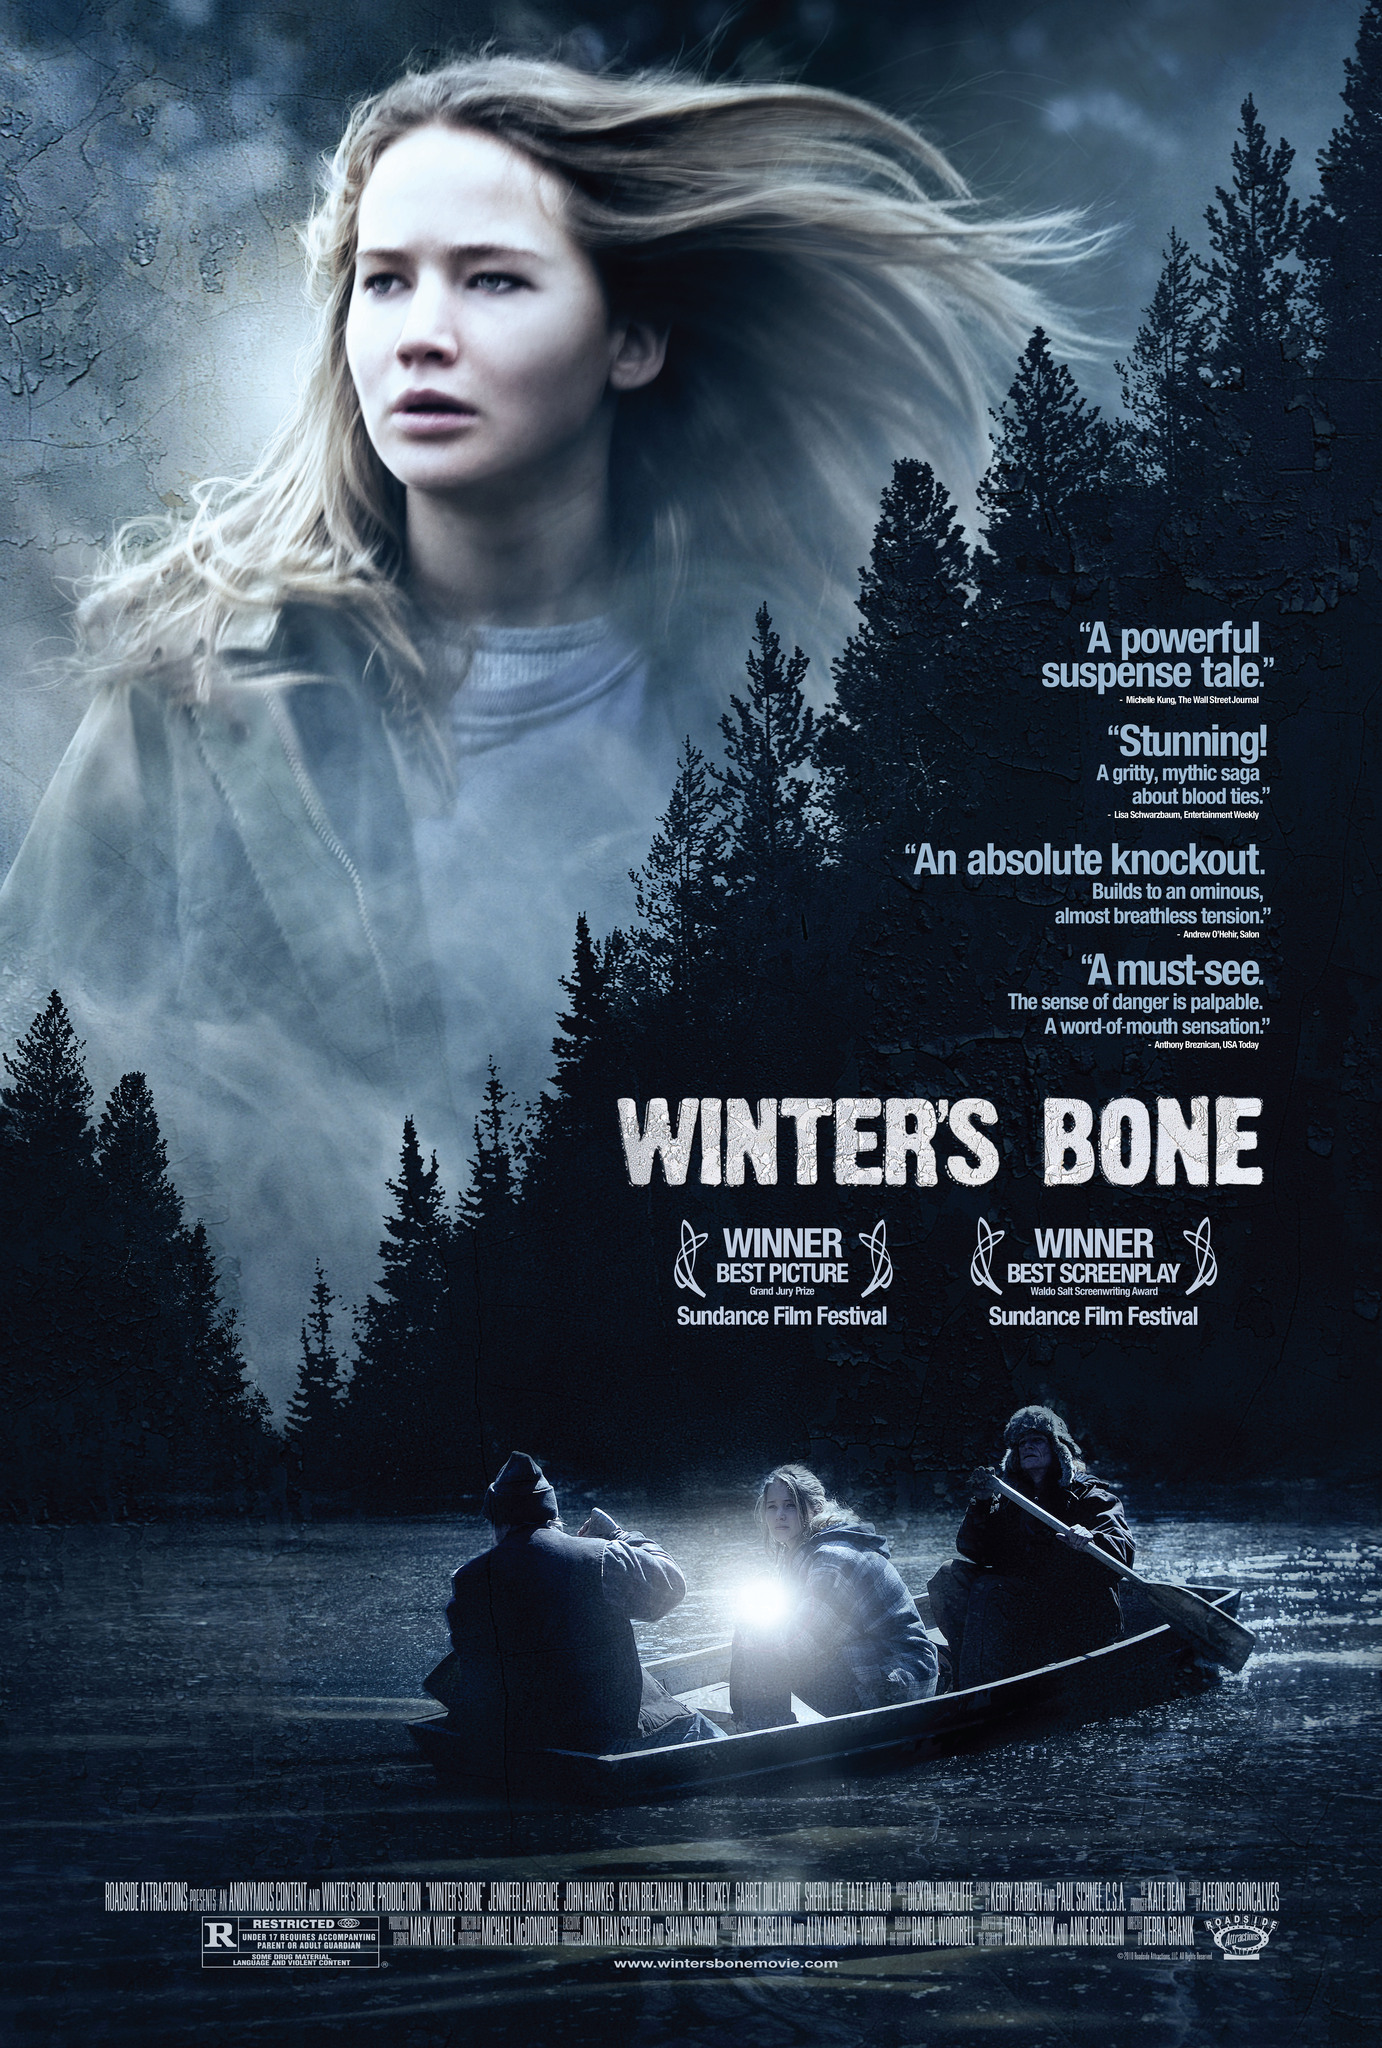 Nonton film Winters Bone layarkaca21 indoxx1 ganool online streaming terbaru